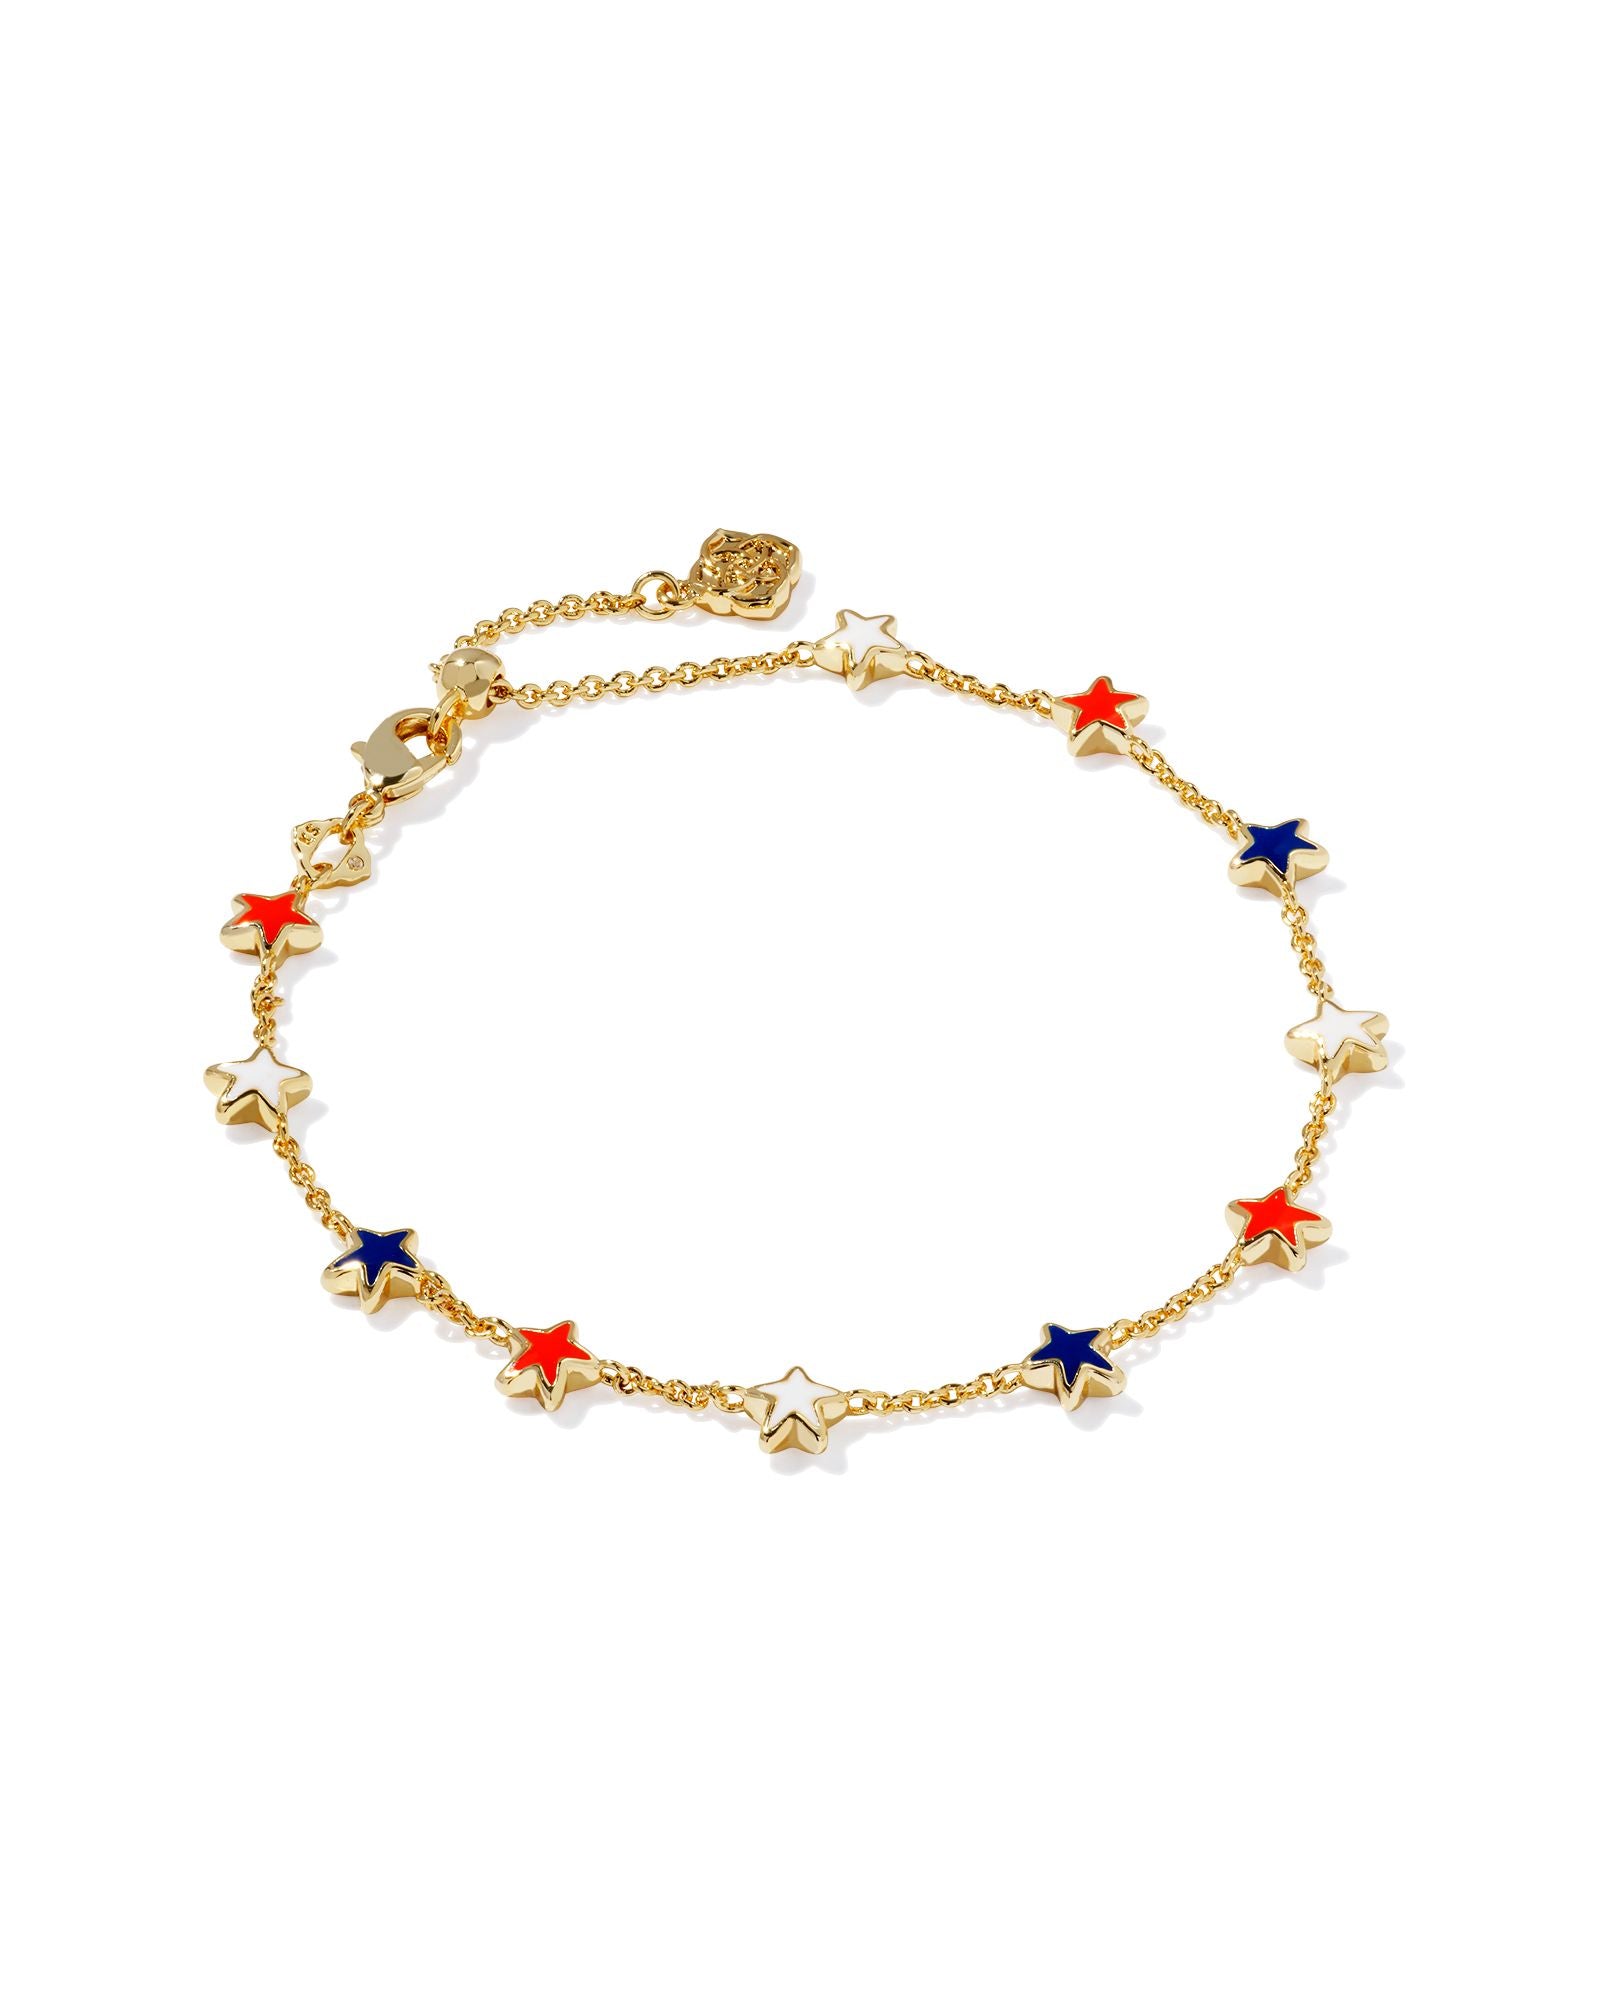 Sierra Star Delicate Chain Bracelet in Gold Red White Blue Mix